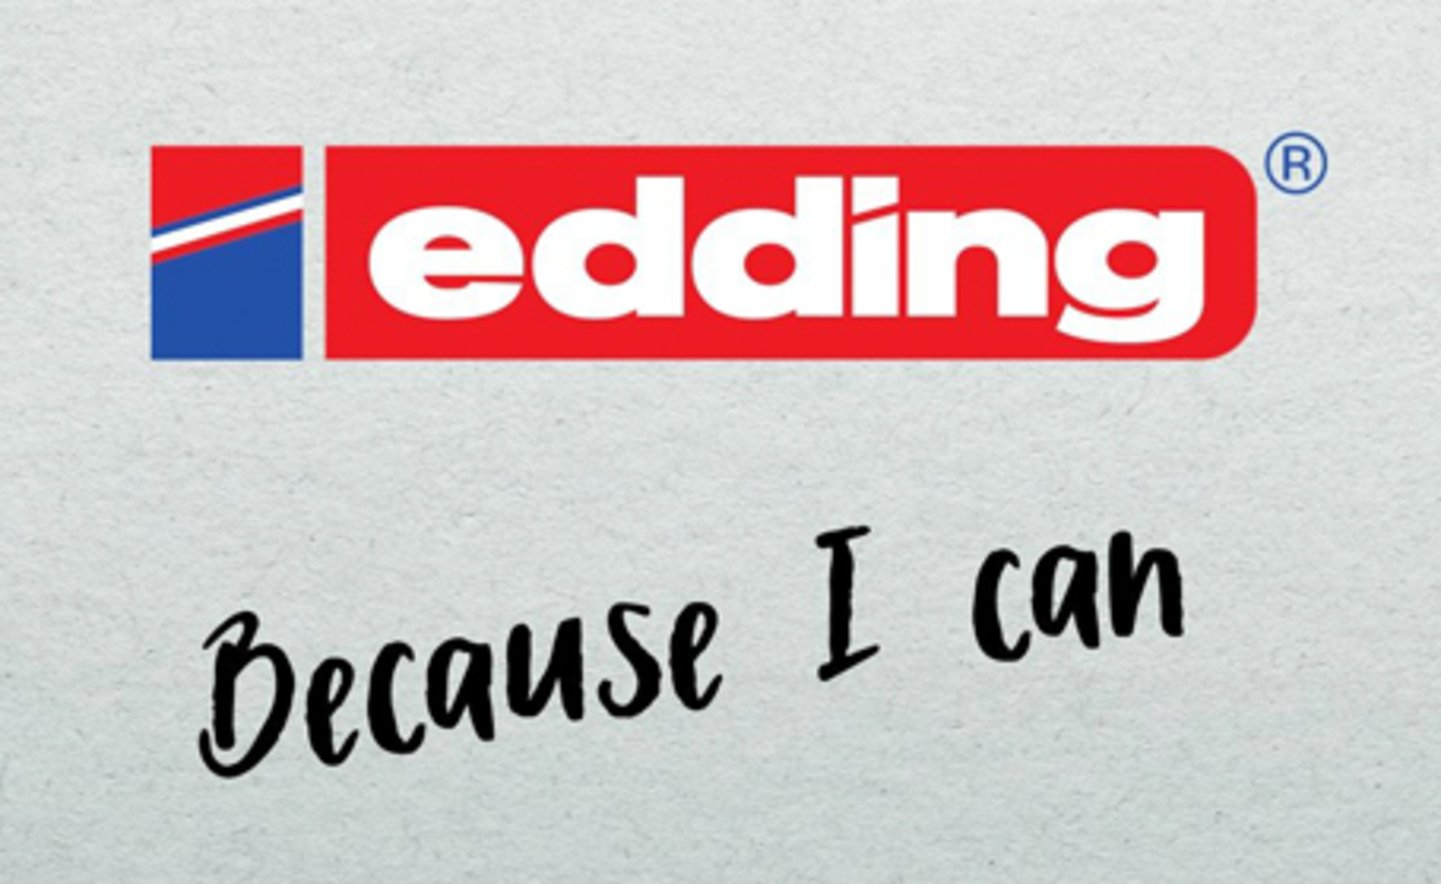 edding – Because I can